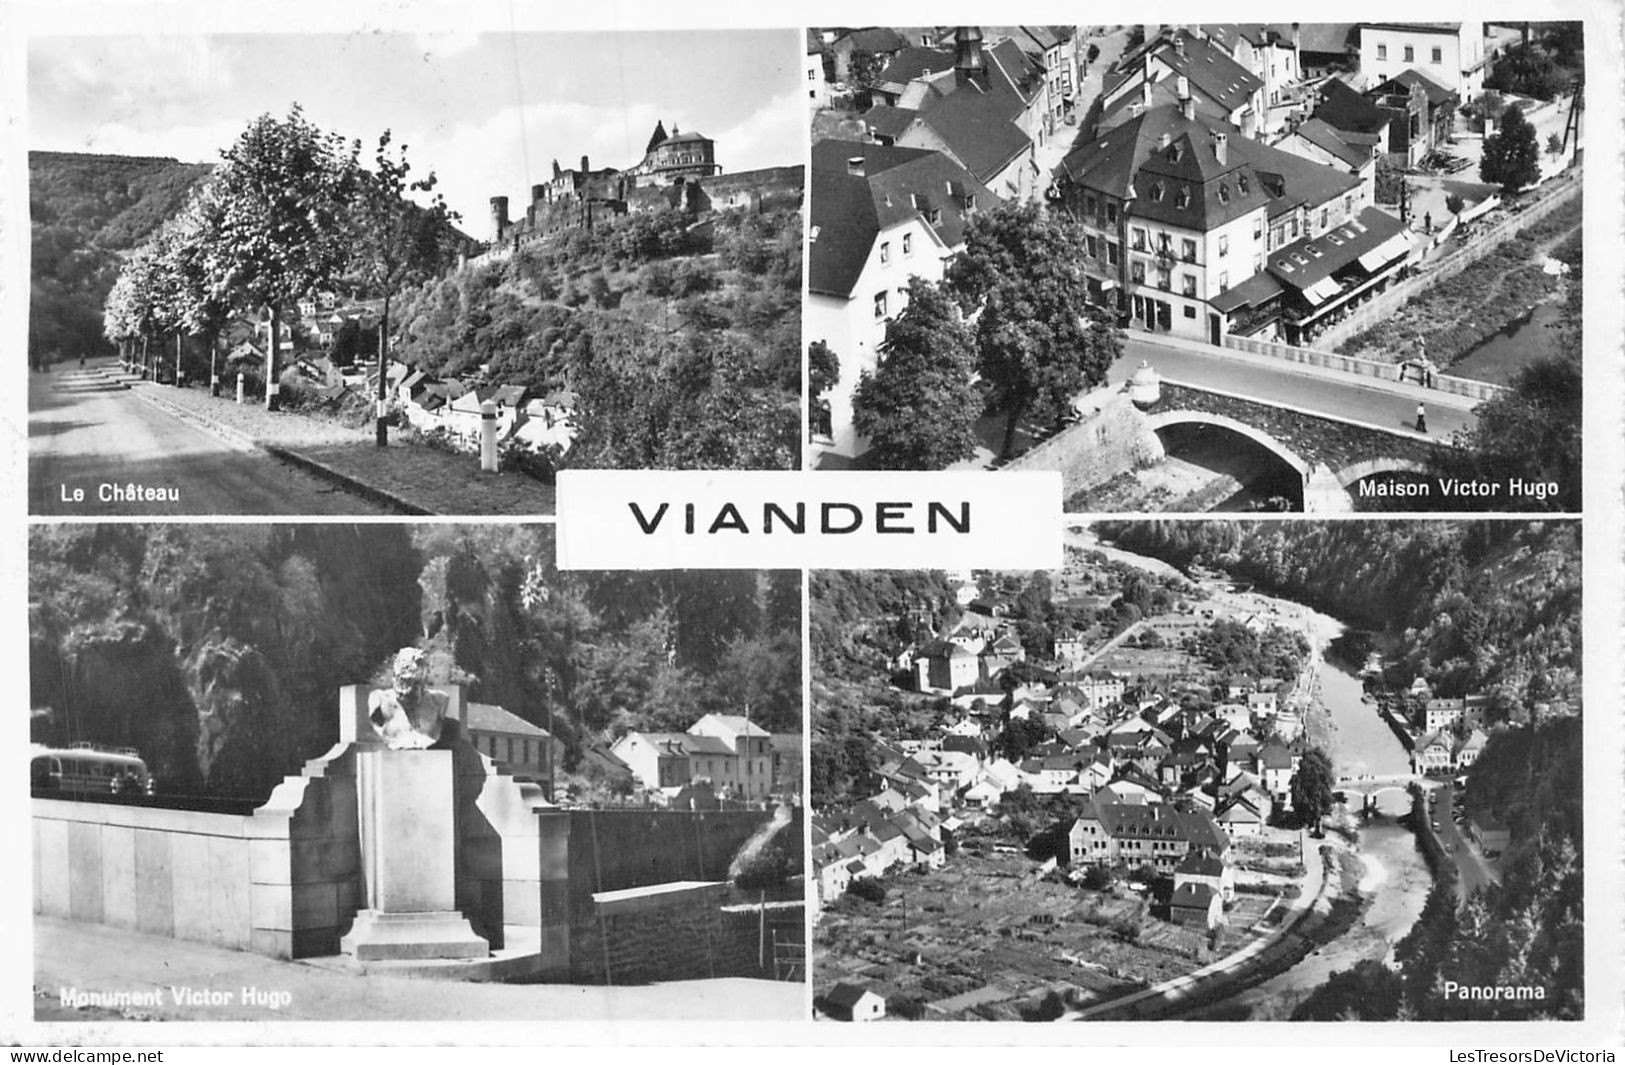 LUXEMBOURG - Vianden - Le Château - Maison Victor Hugo - Monument Victor Hugo - Panorama - Carte Postale Ancienne - Vianden